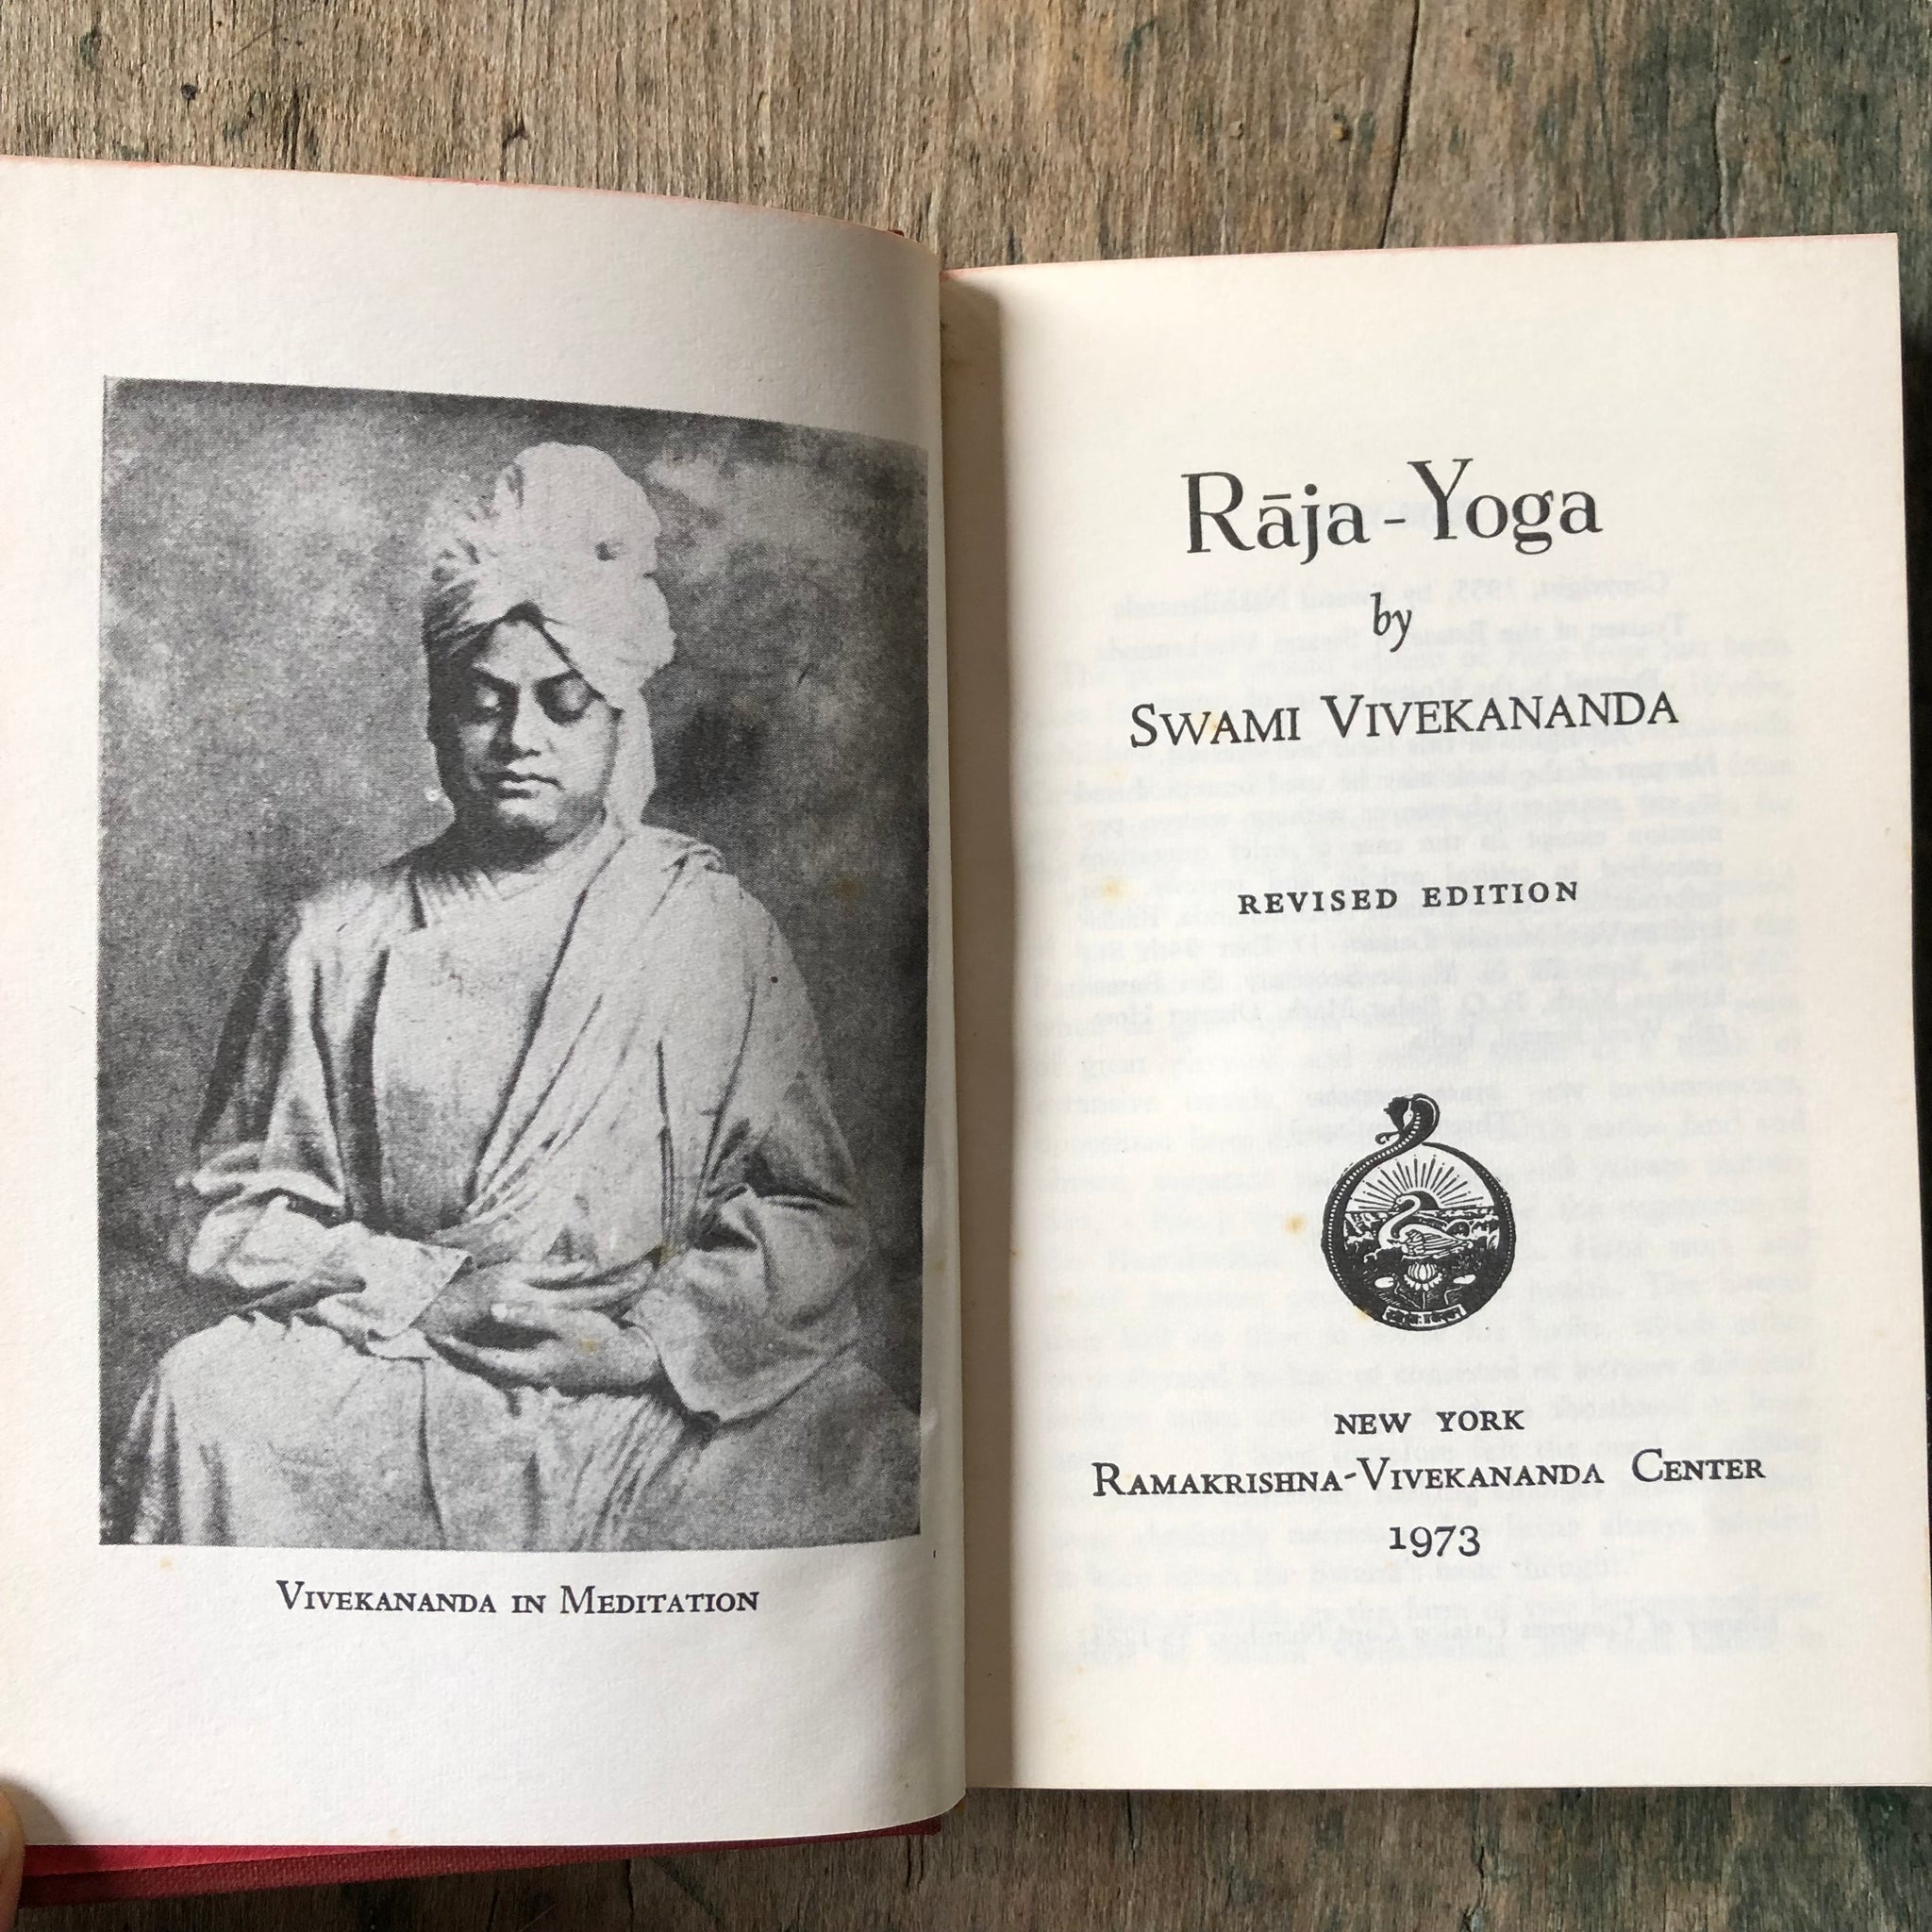 Raja Yoga, E-book, Swami Vivekananda